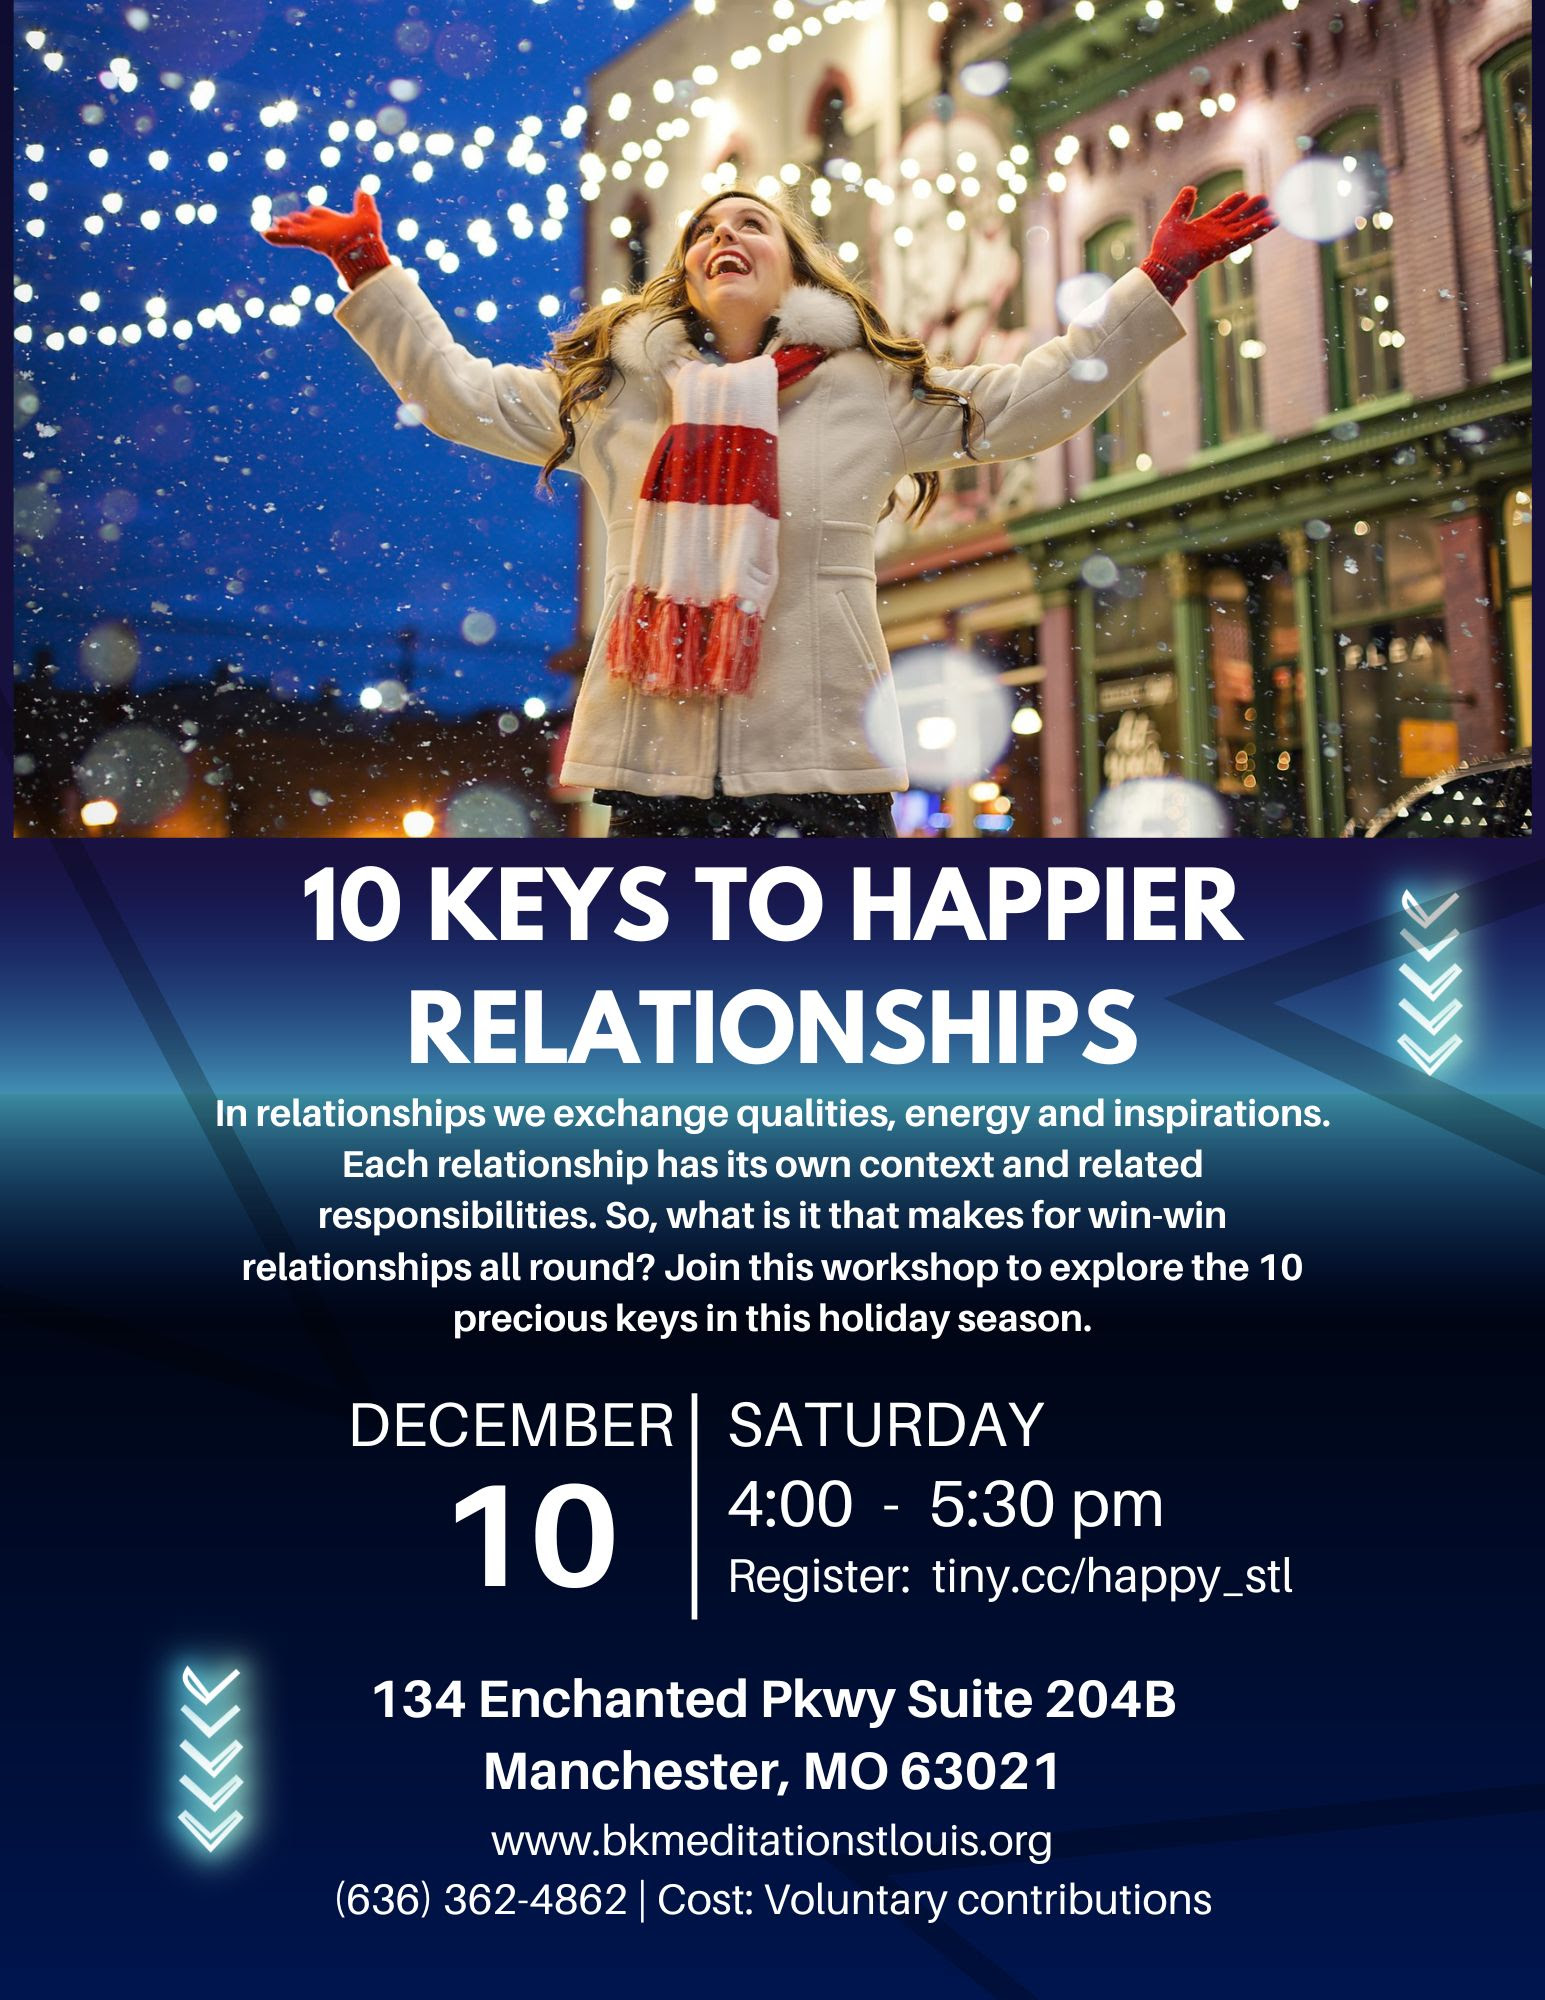 10 Keys to Happier Relationships